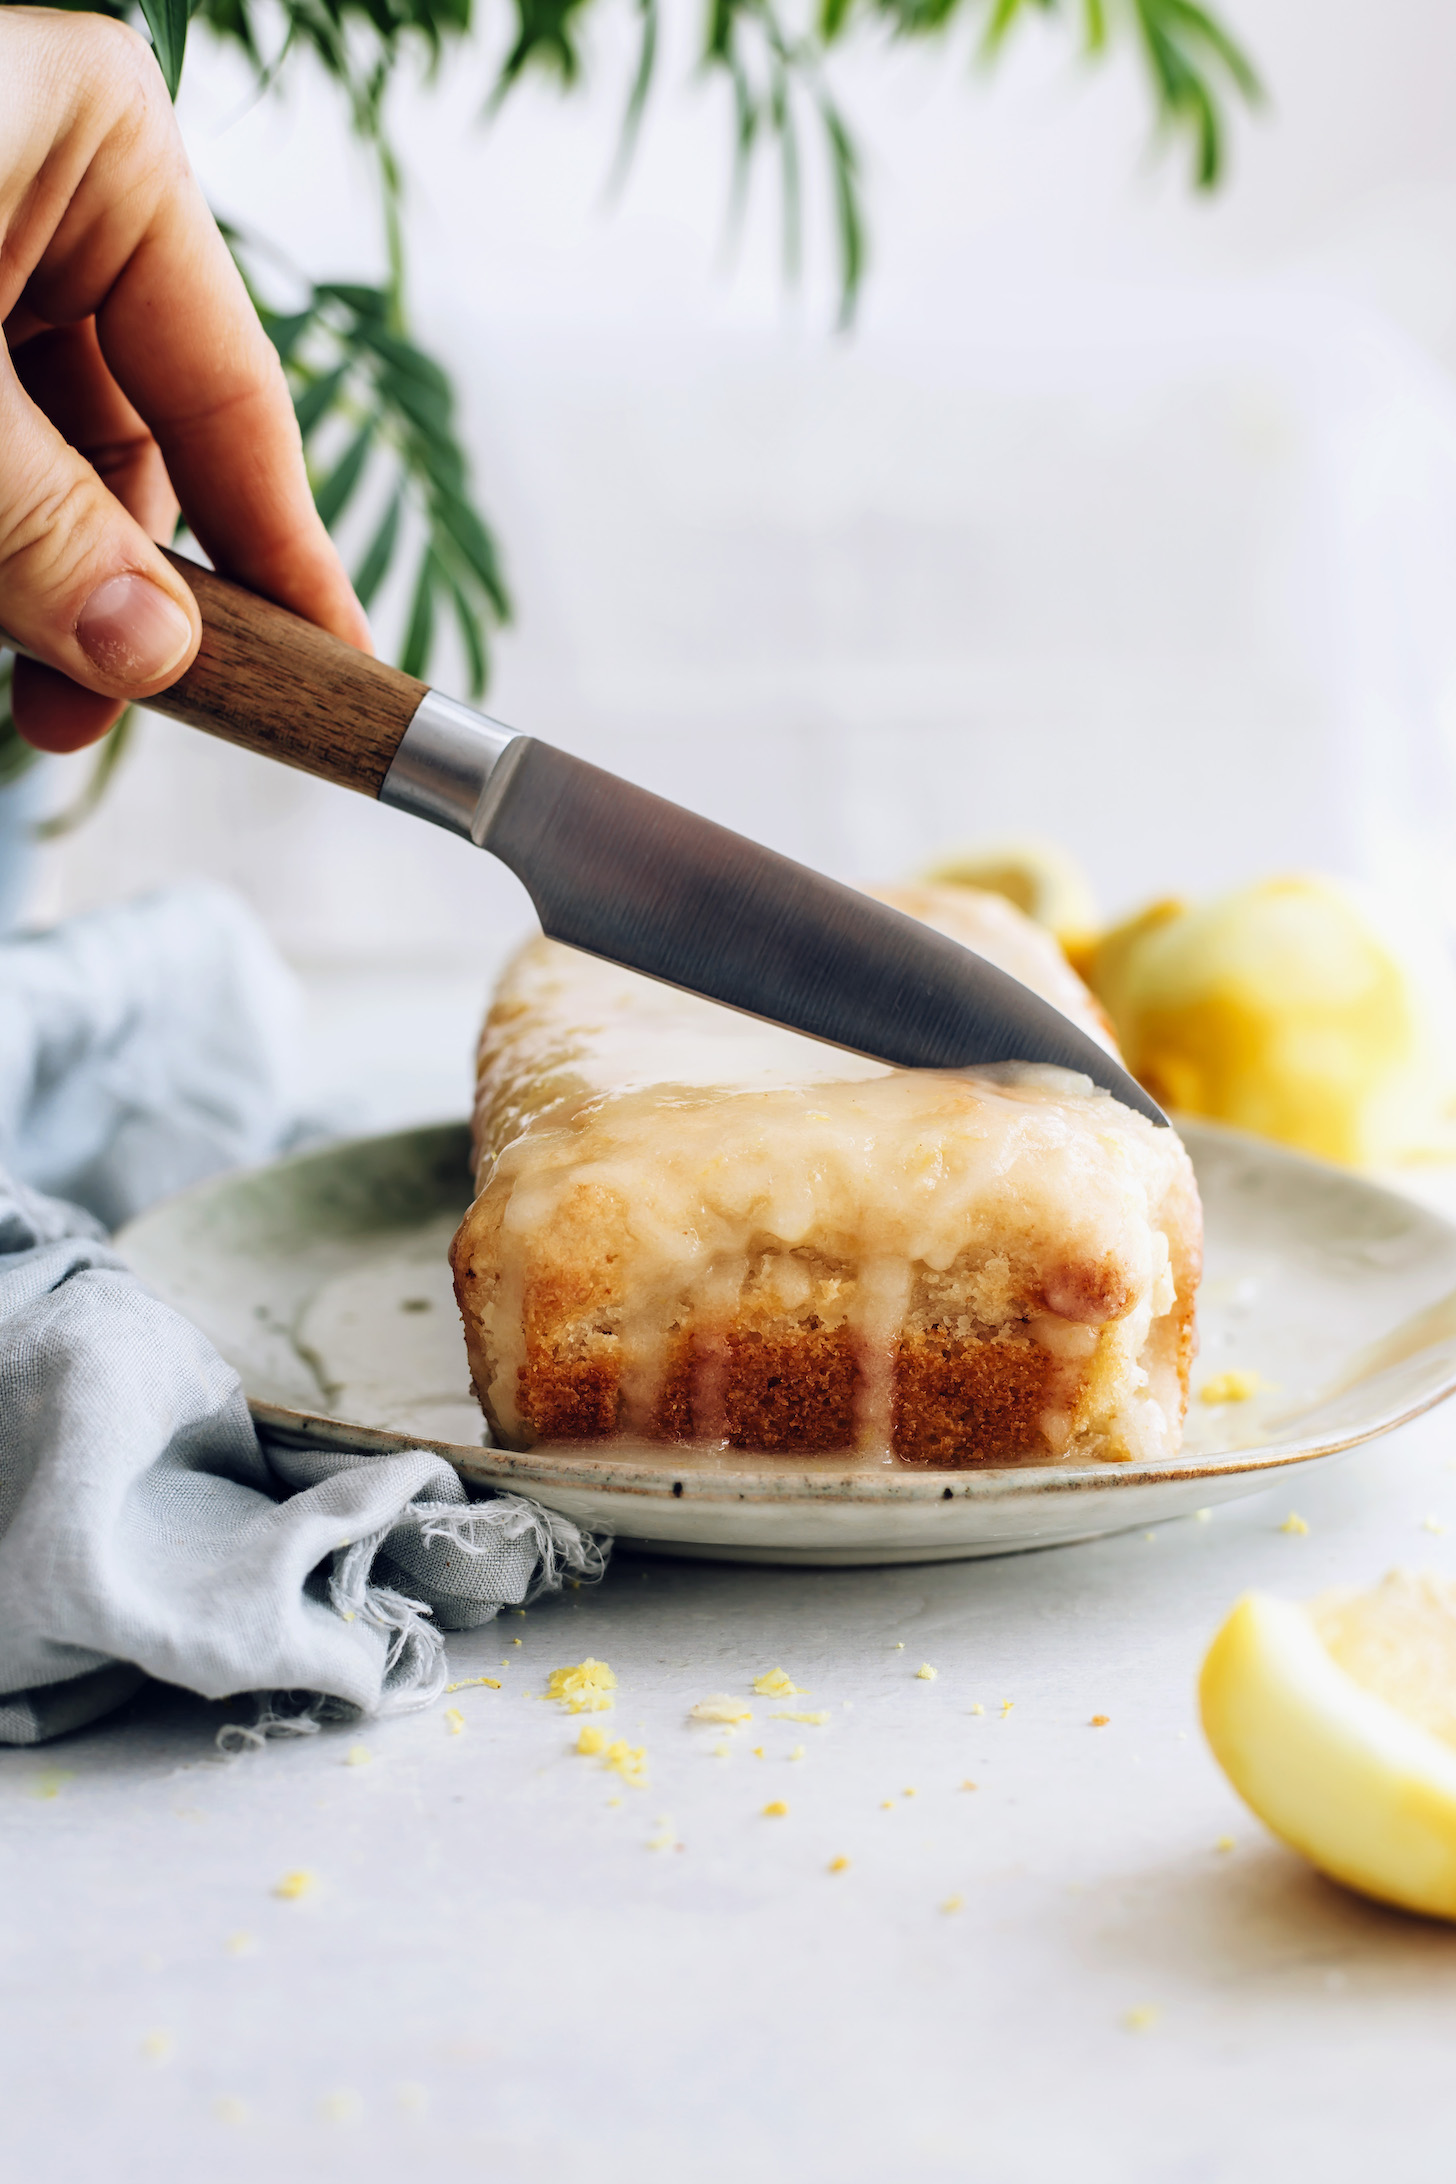 Slicing into a gluten-free lemon loaf cake